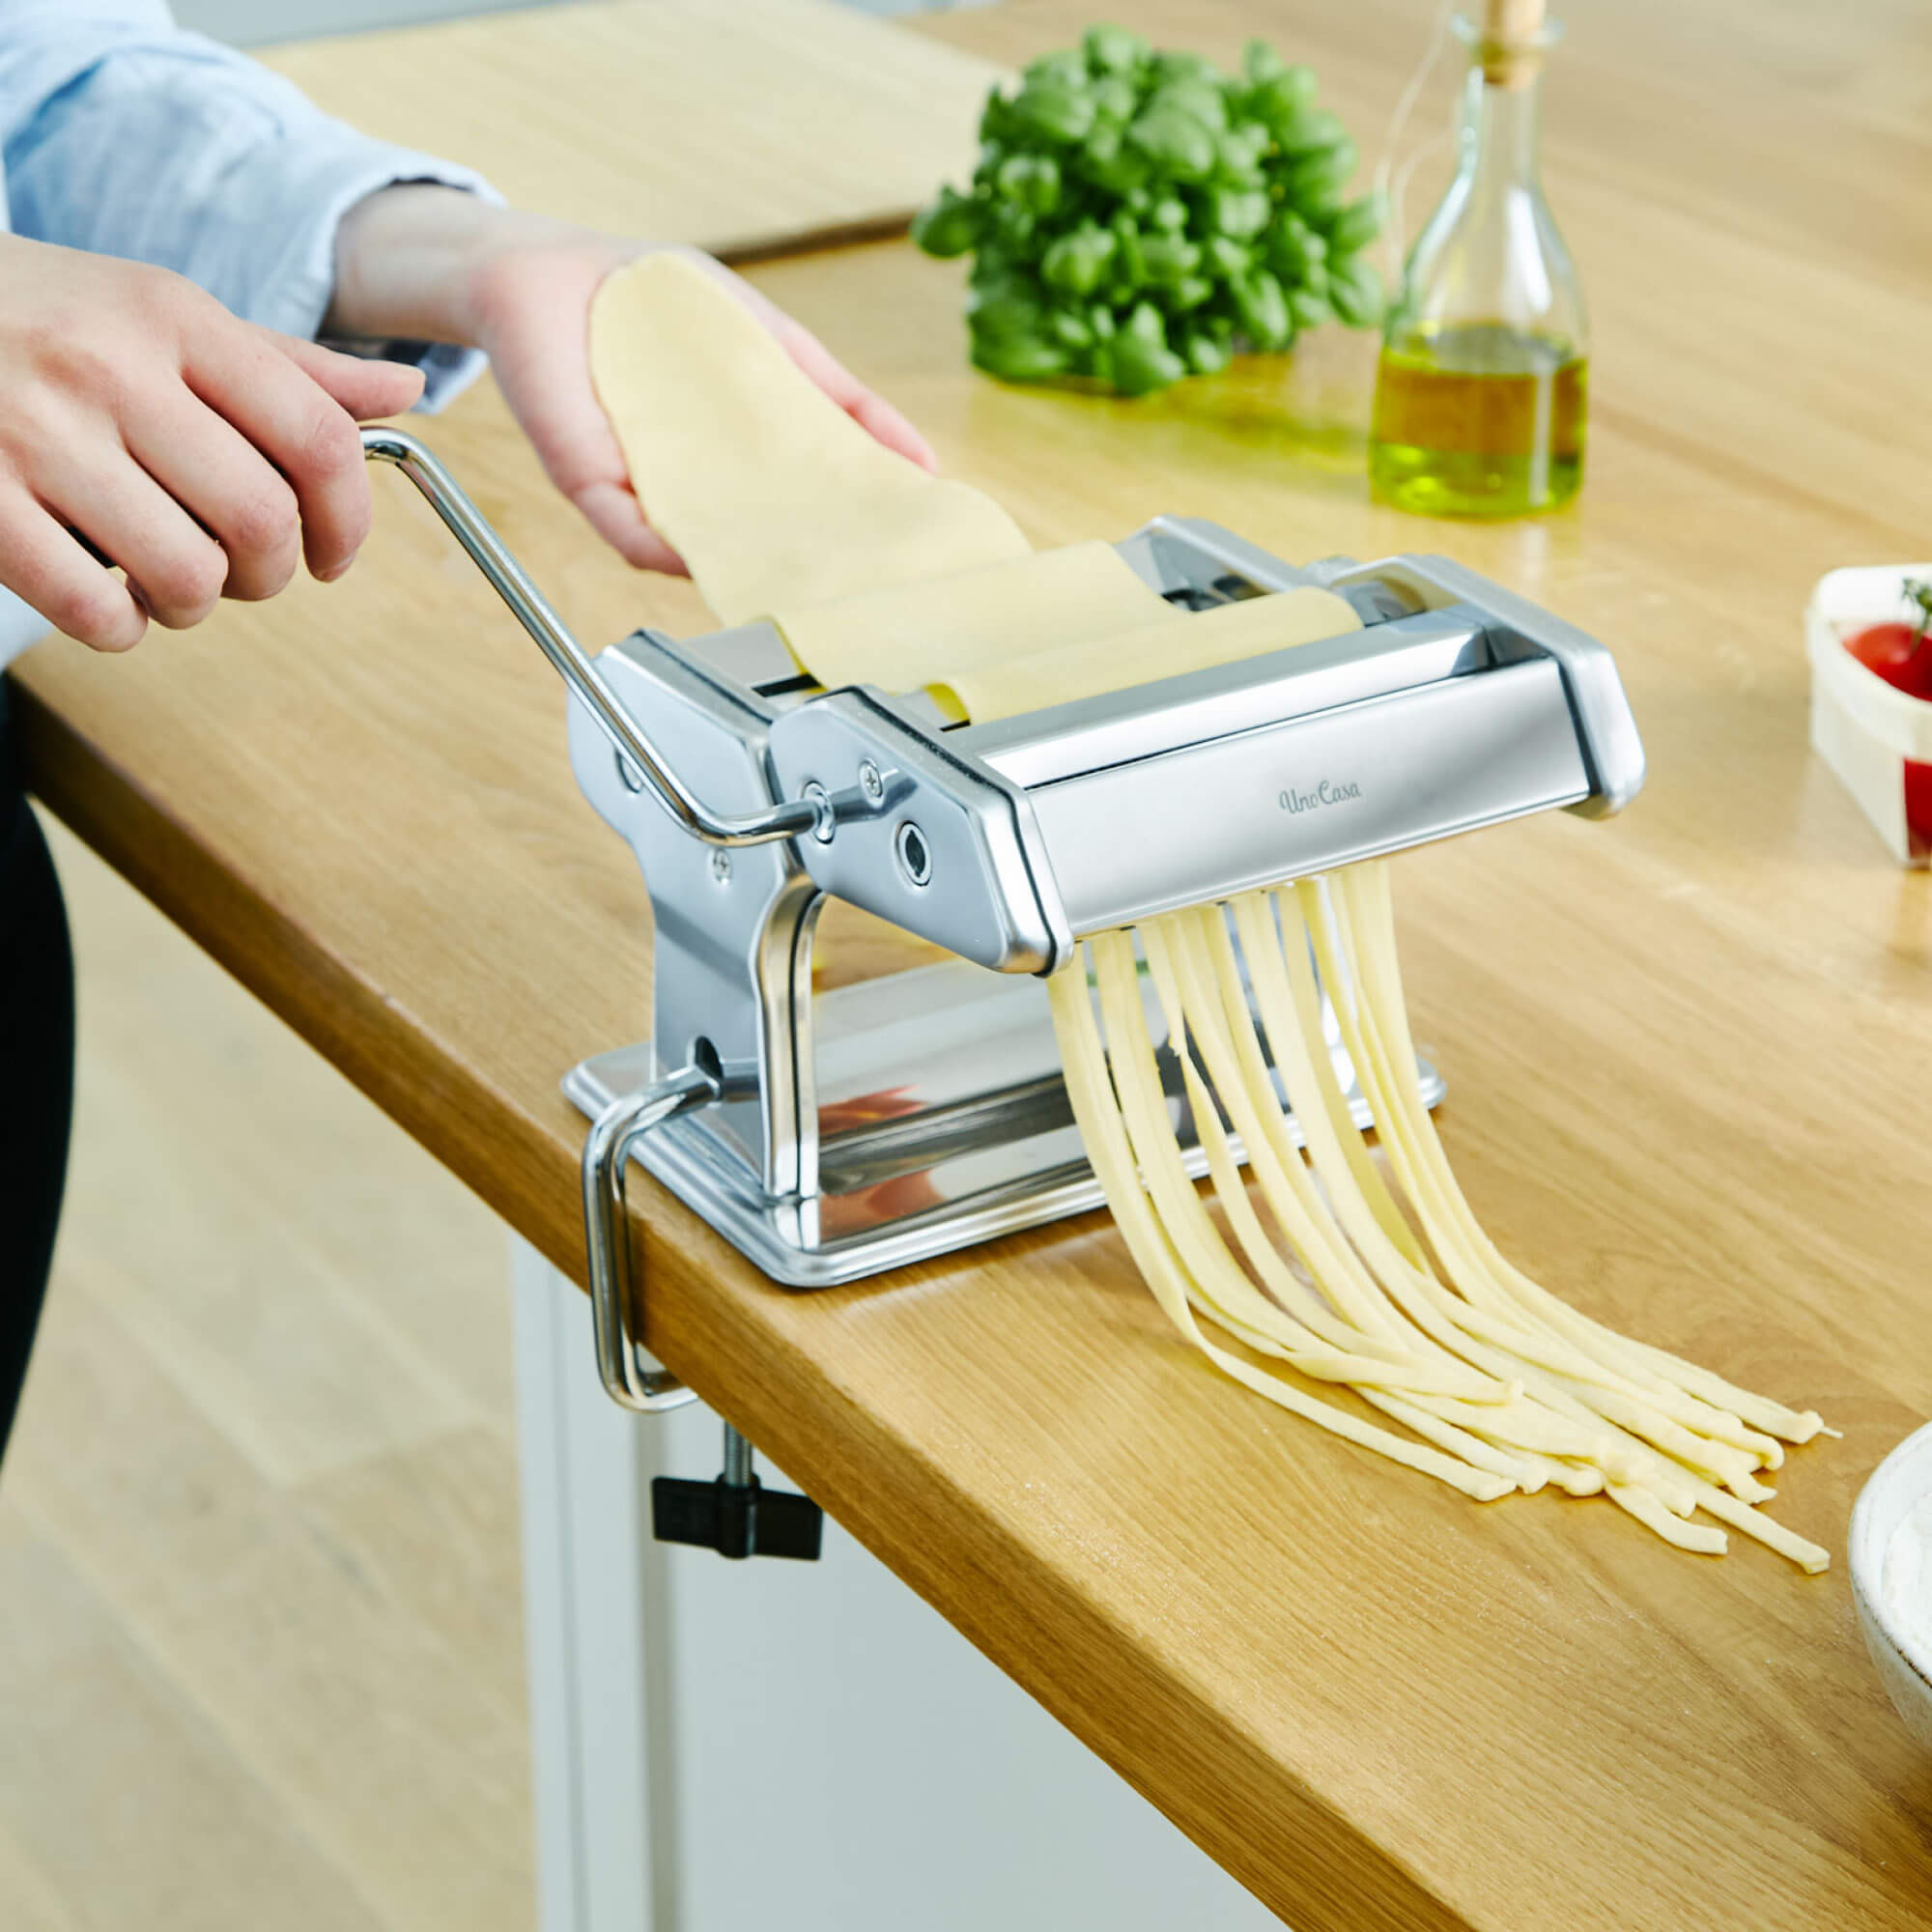 Pasta Maker Machine, Homemade Stainless Steel Manual Roller Pasta